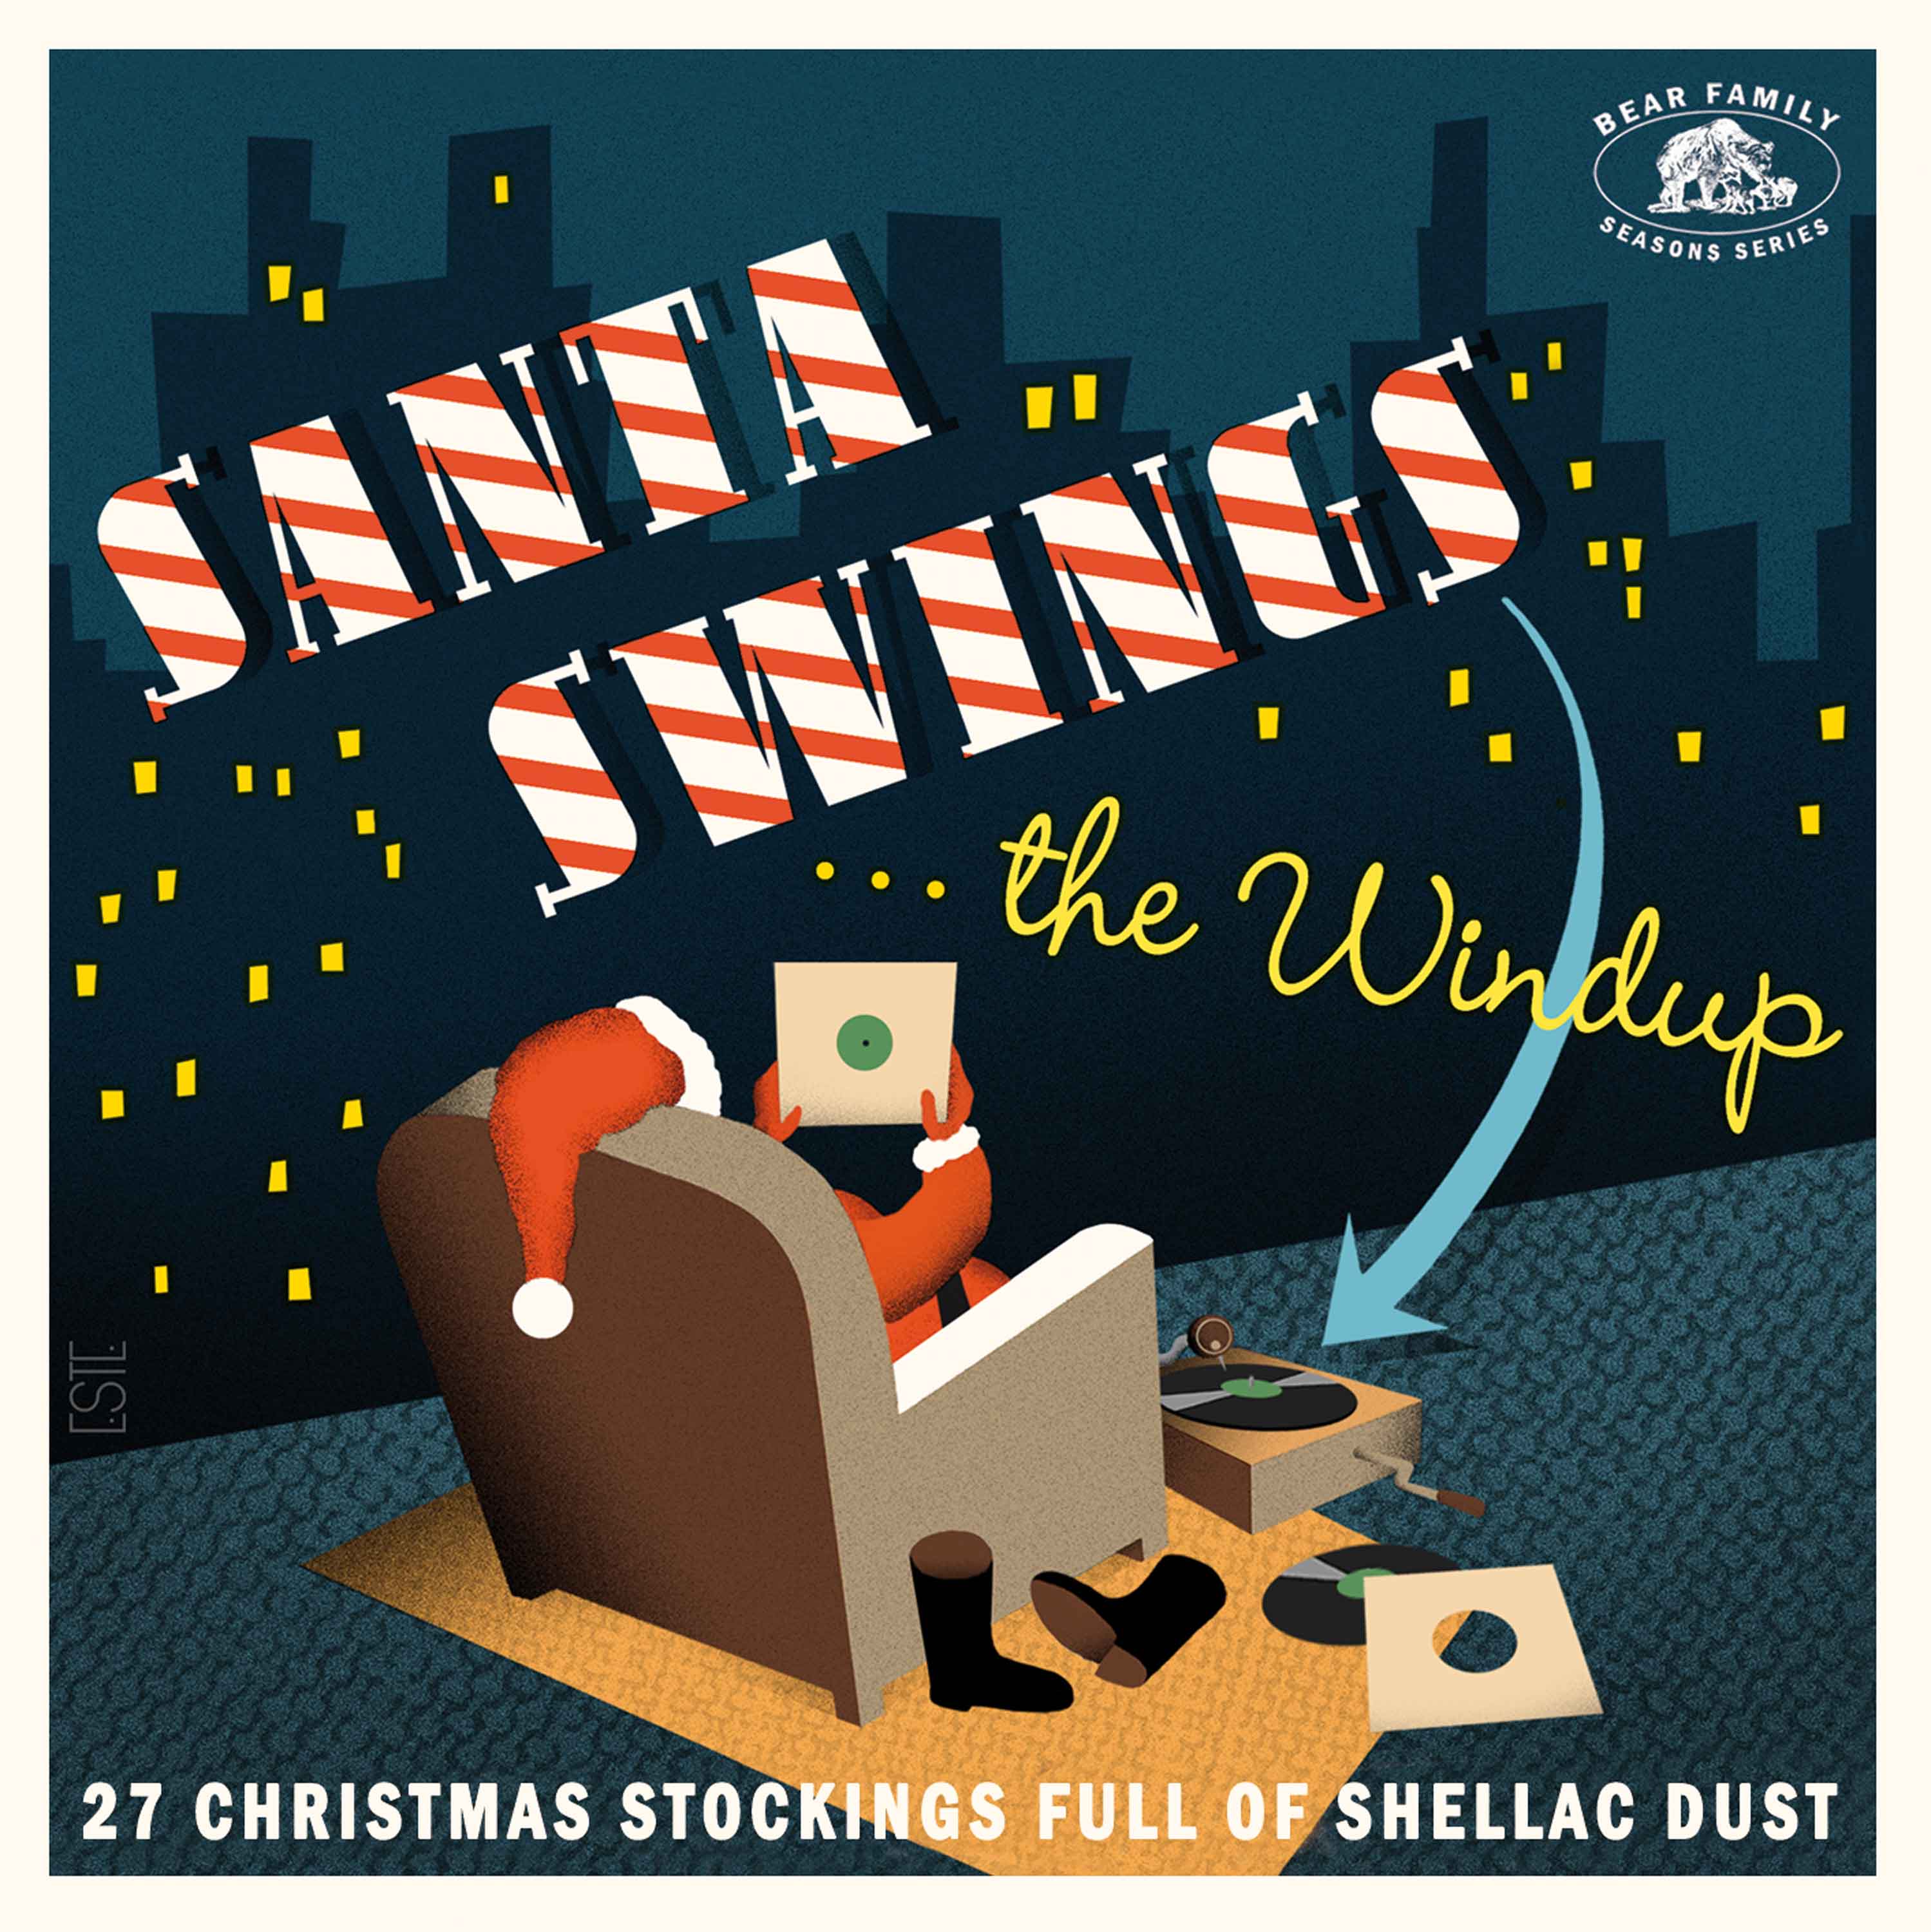 Various - Season\'s Greetings CD: Family Dust Bear Full - Shellac (CD) - Stockings Of Records 27 Christmas Windup The Swings Santa